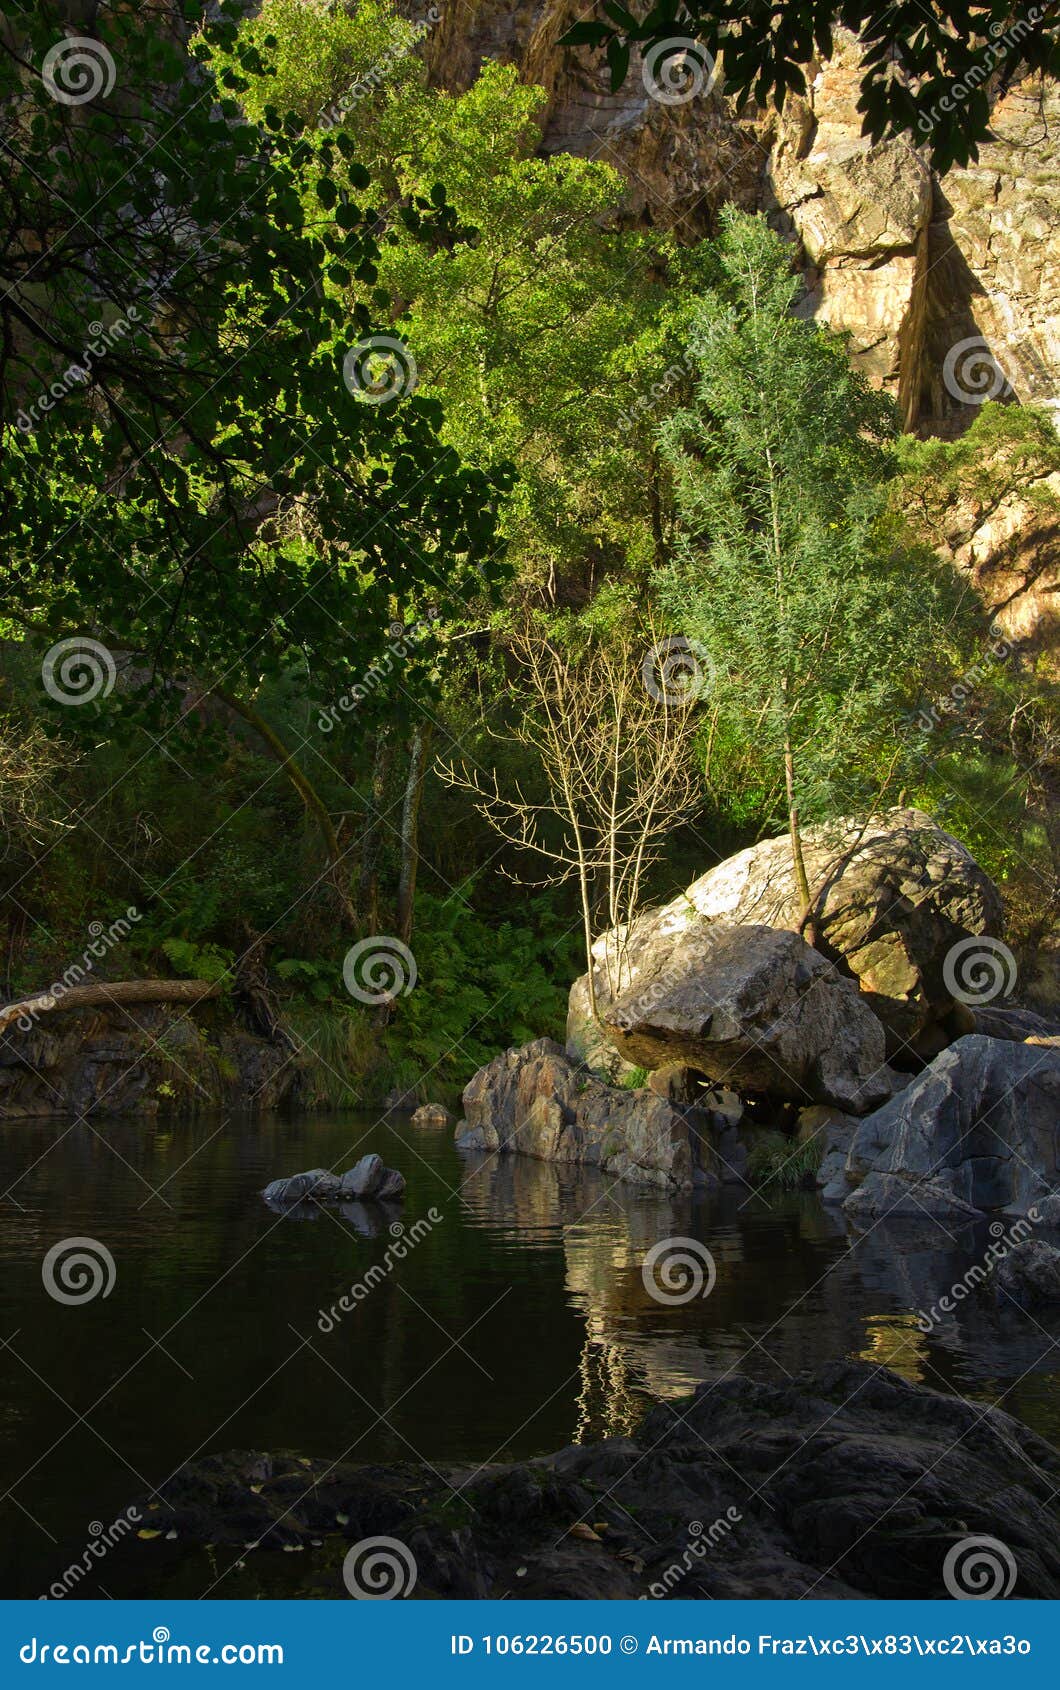 rocks, trees and water at fragas de sao simao